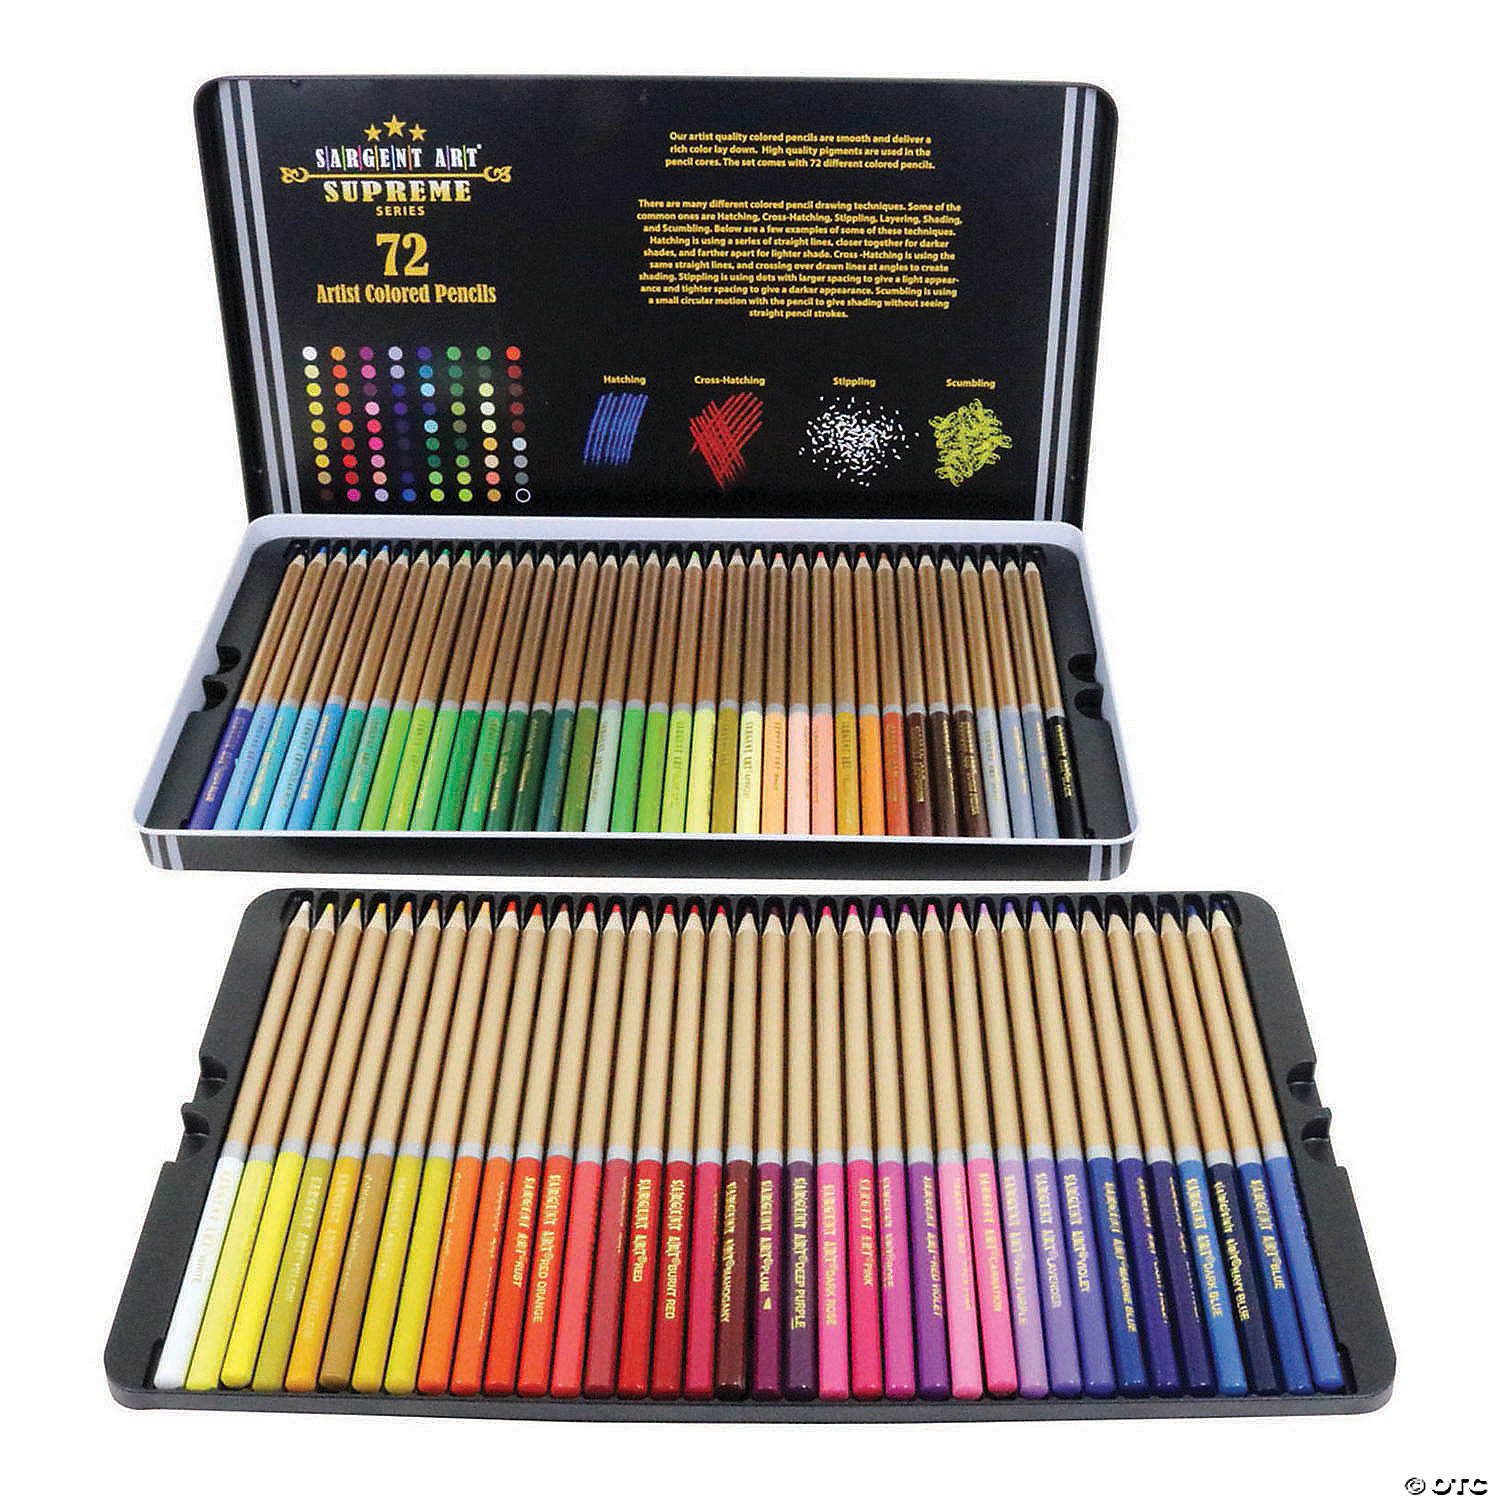 Colored Pencils 12 Pack (Sargent Art)